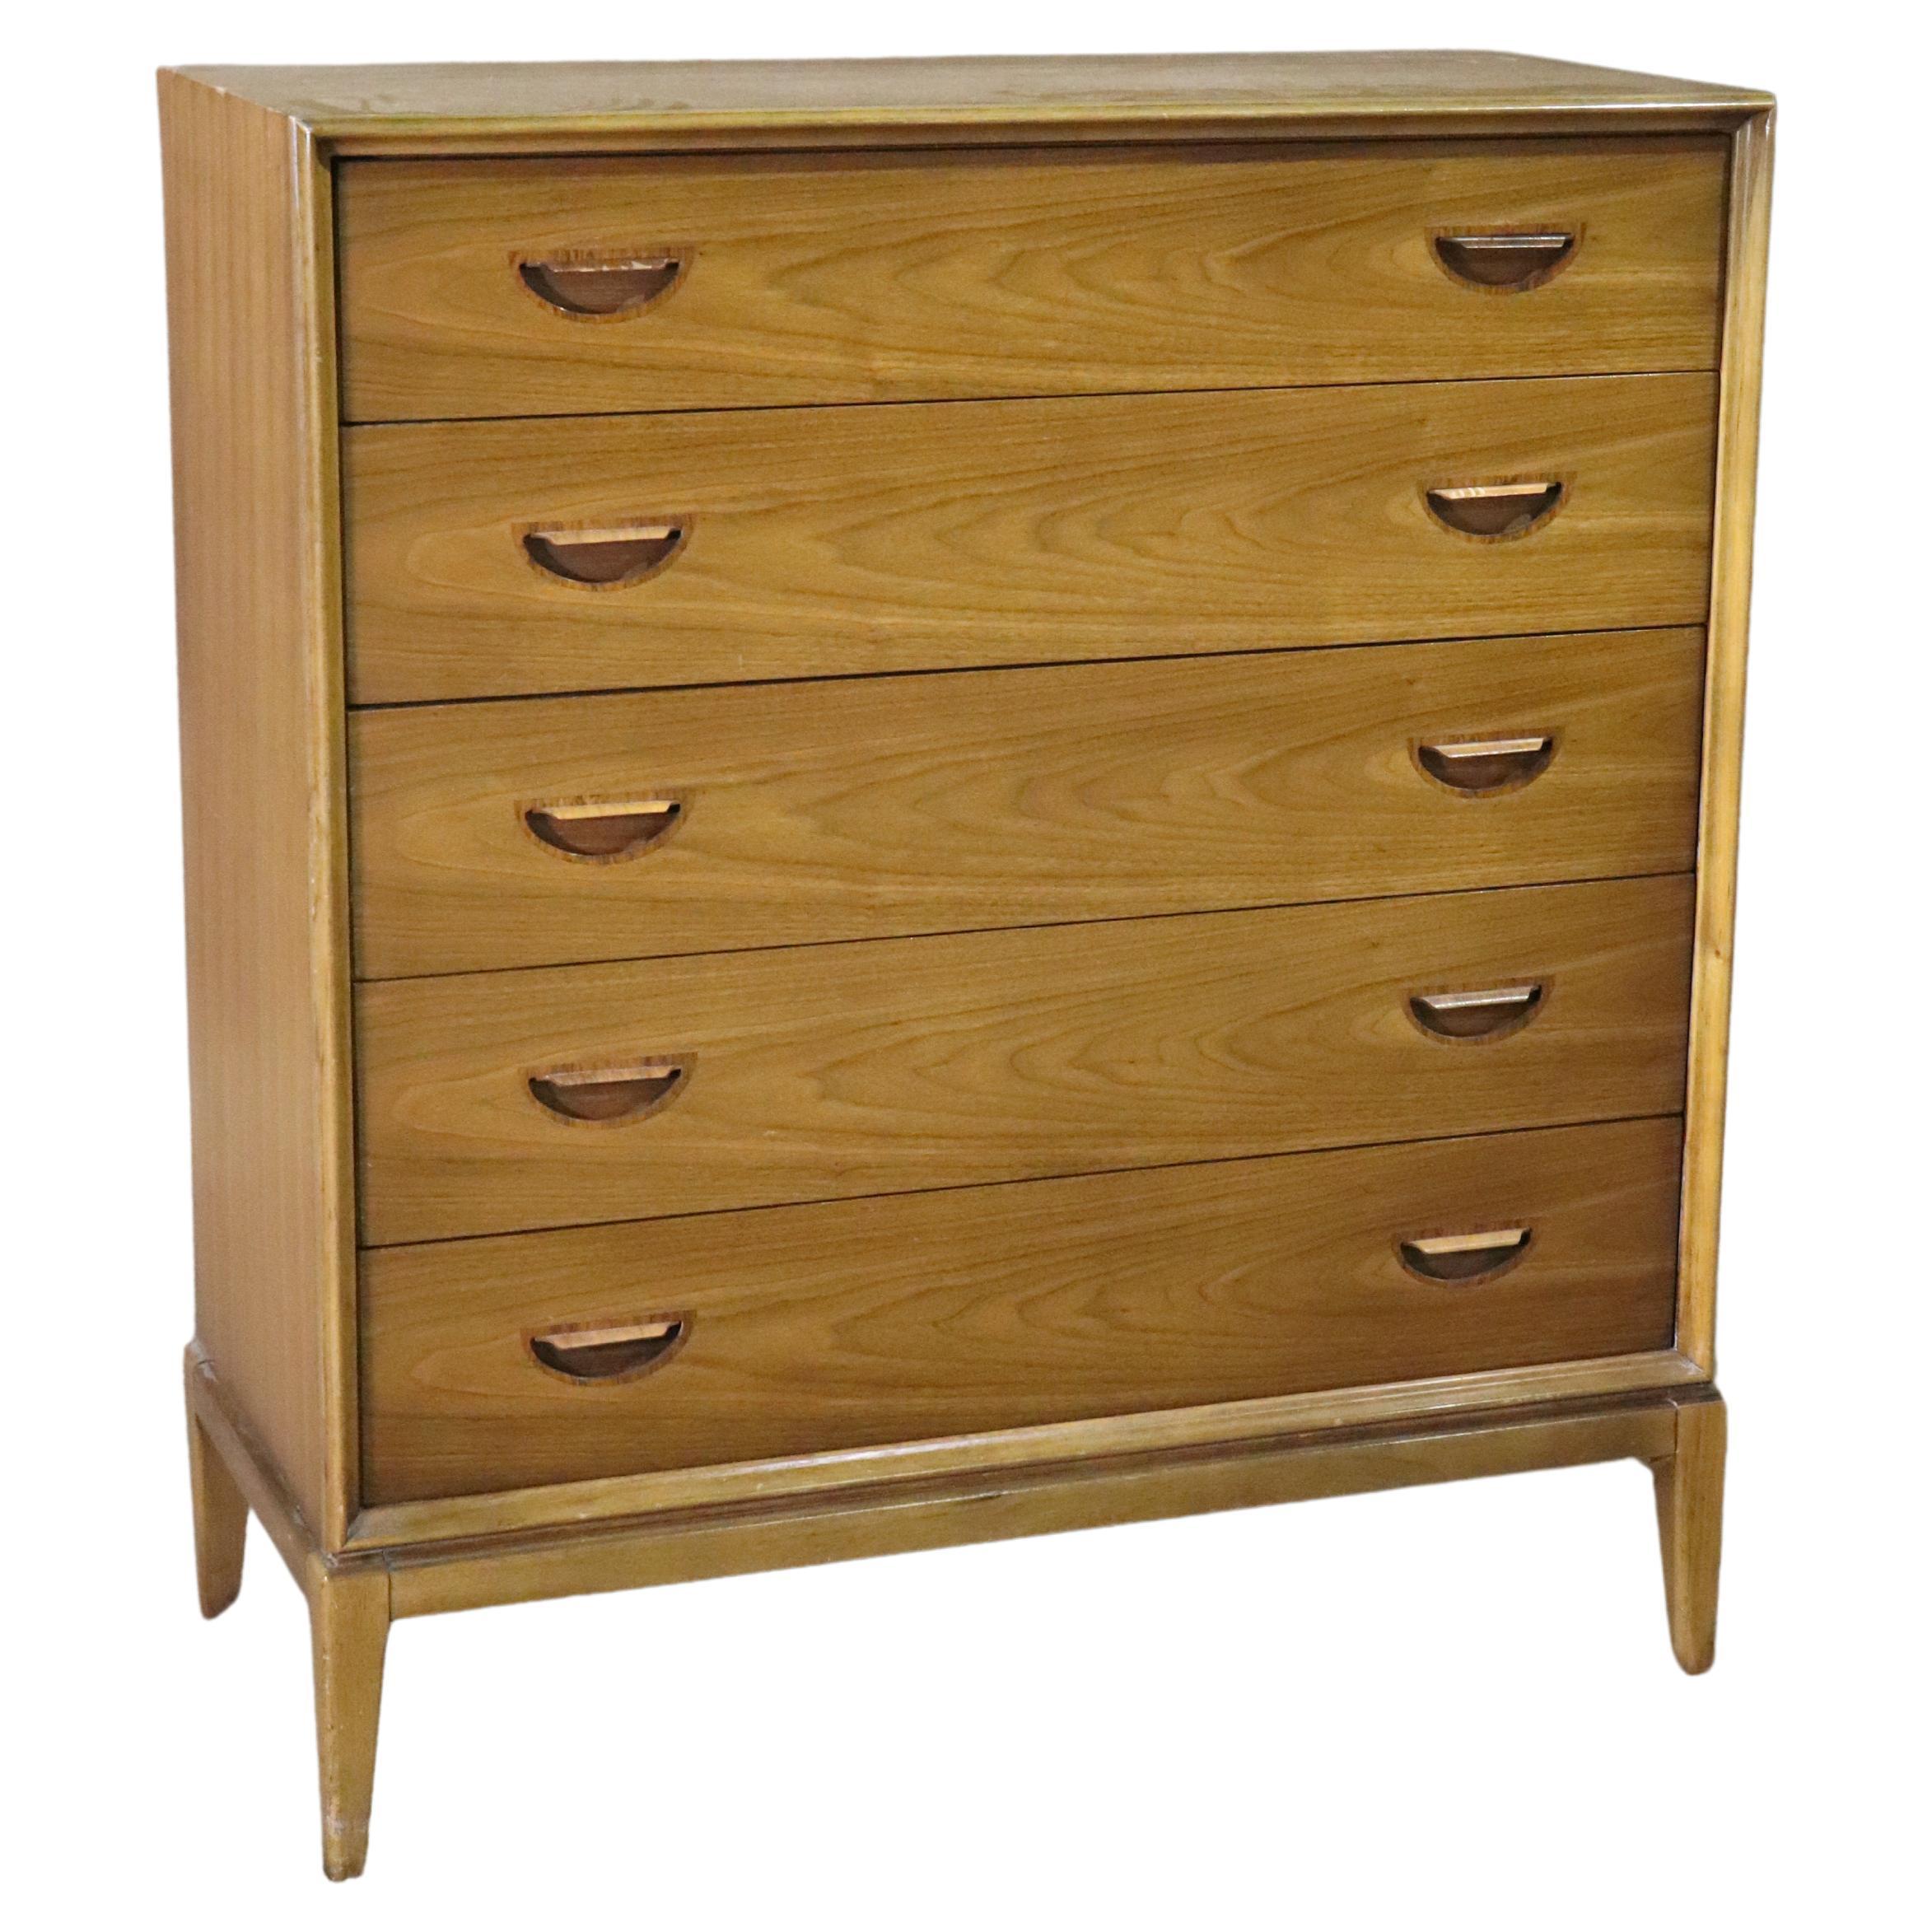 Vintage Dresser w/ Inset Rosewood Handles